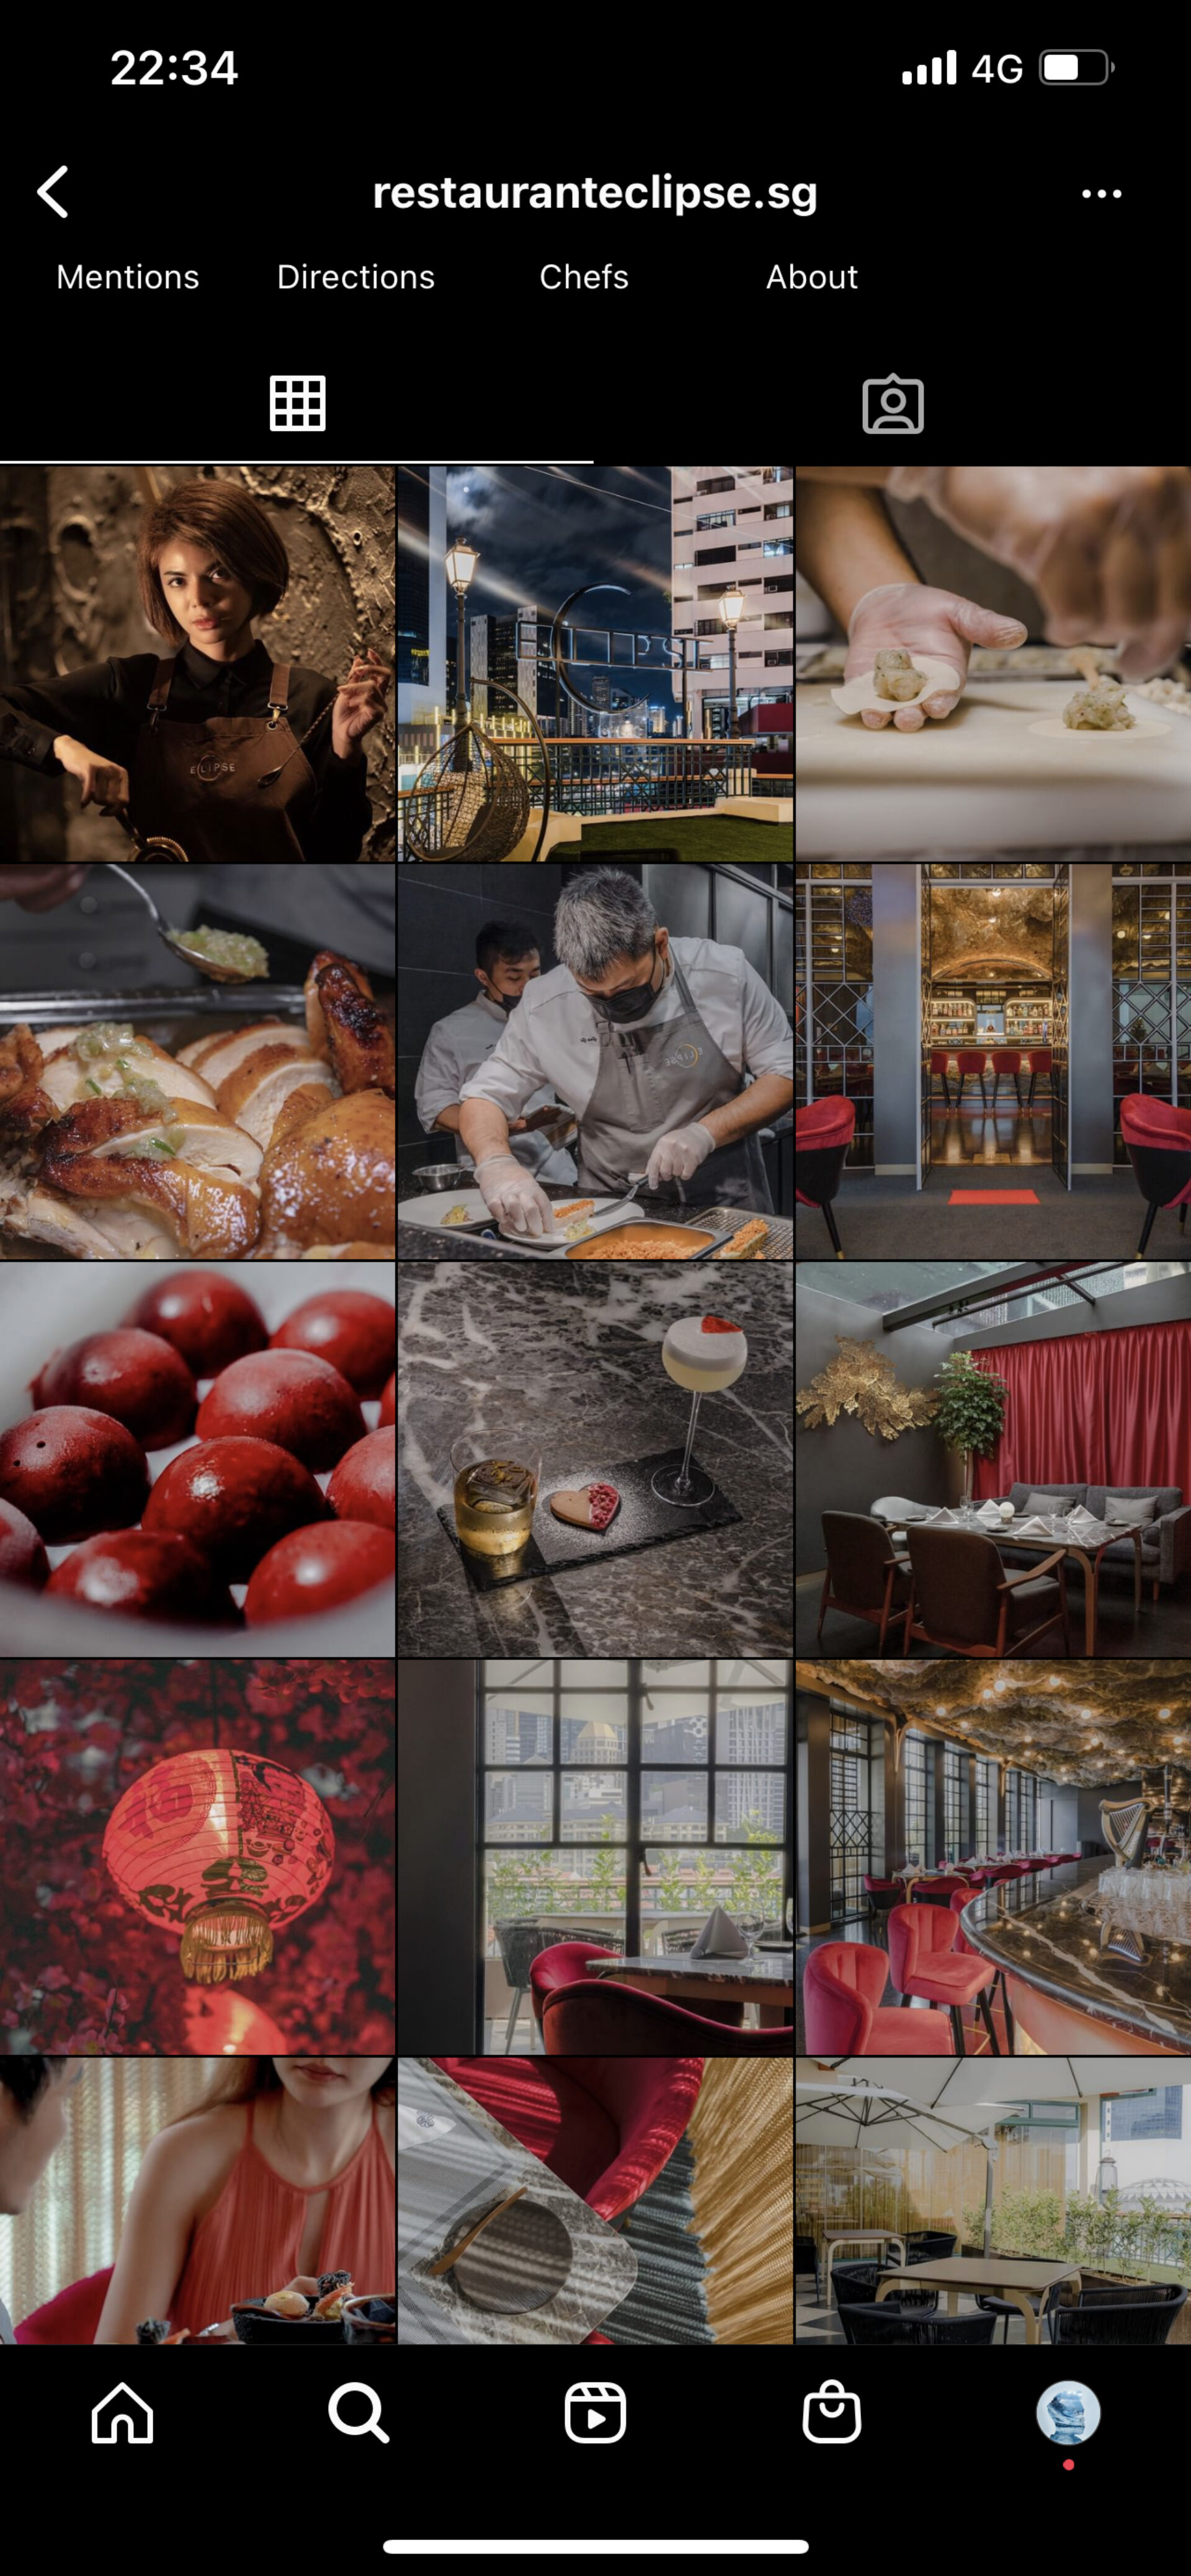 Restaurant Eclipse Instagram feed 3 agency website